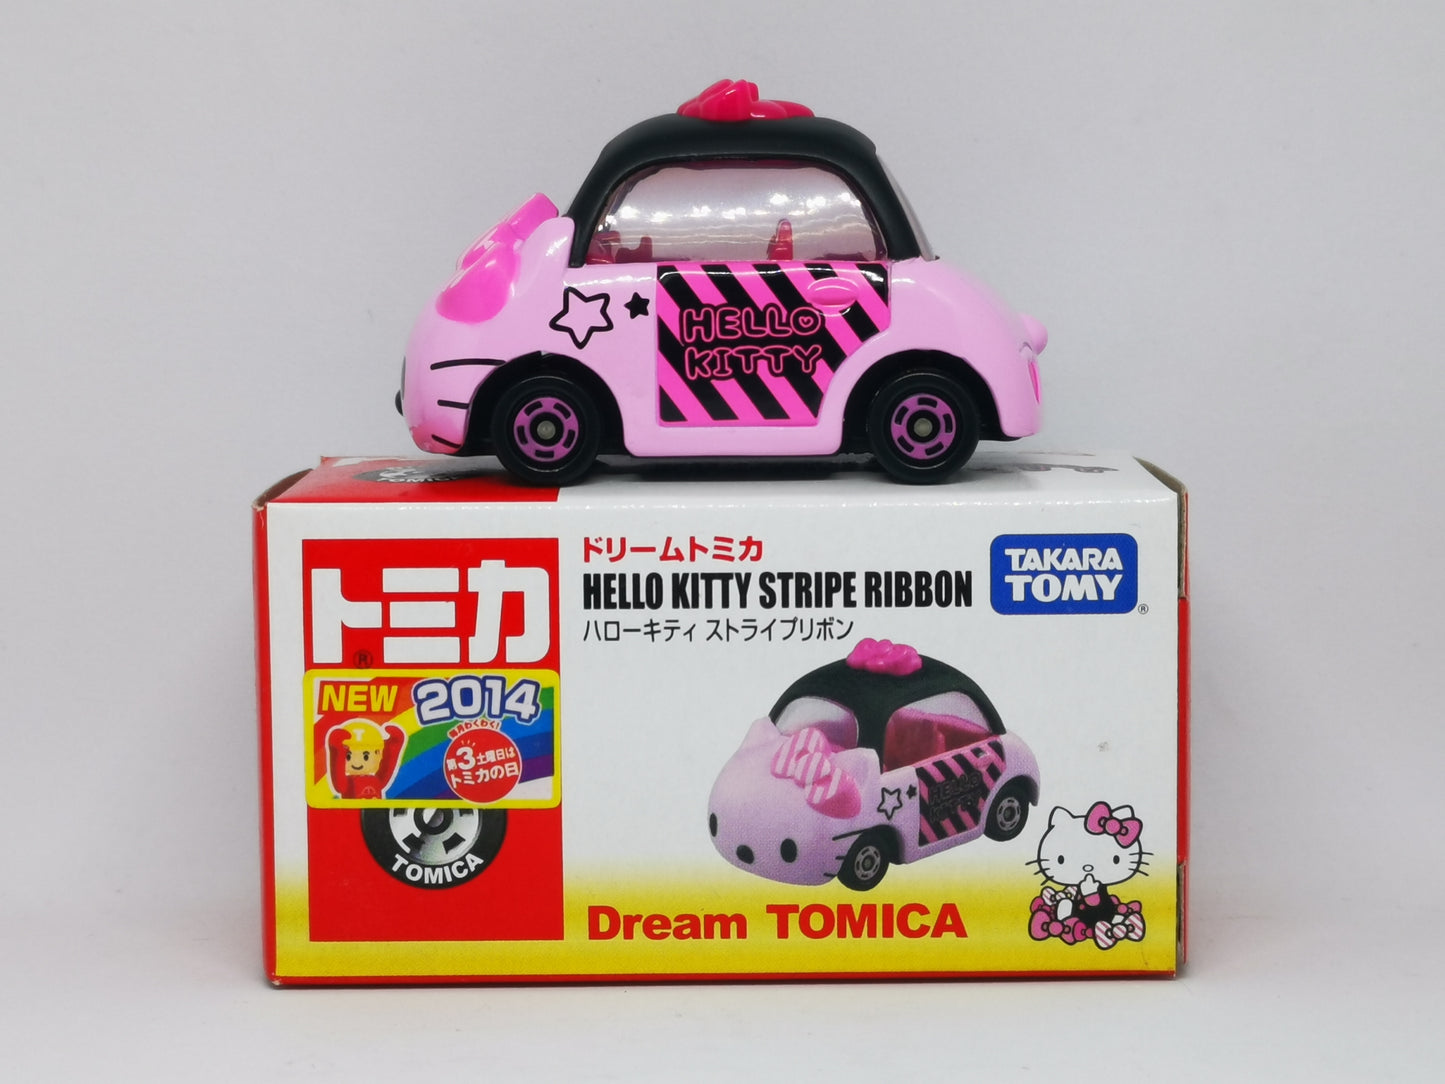 2014 Dream Tomica Hello Kitty Stripe Ribbon Takara Tomy